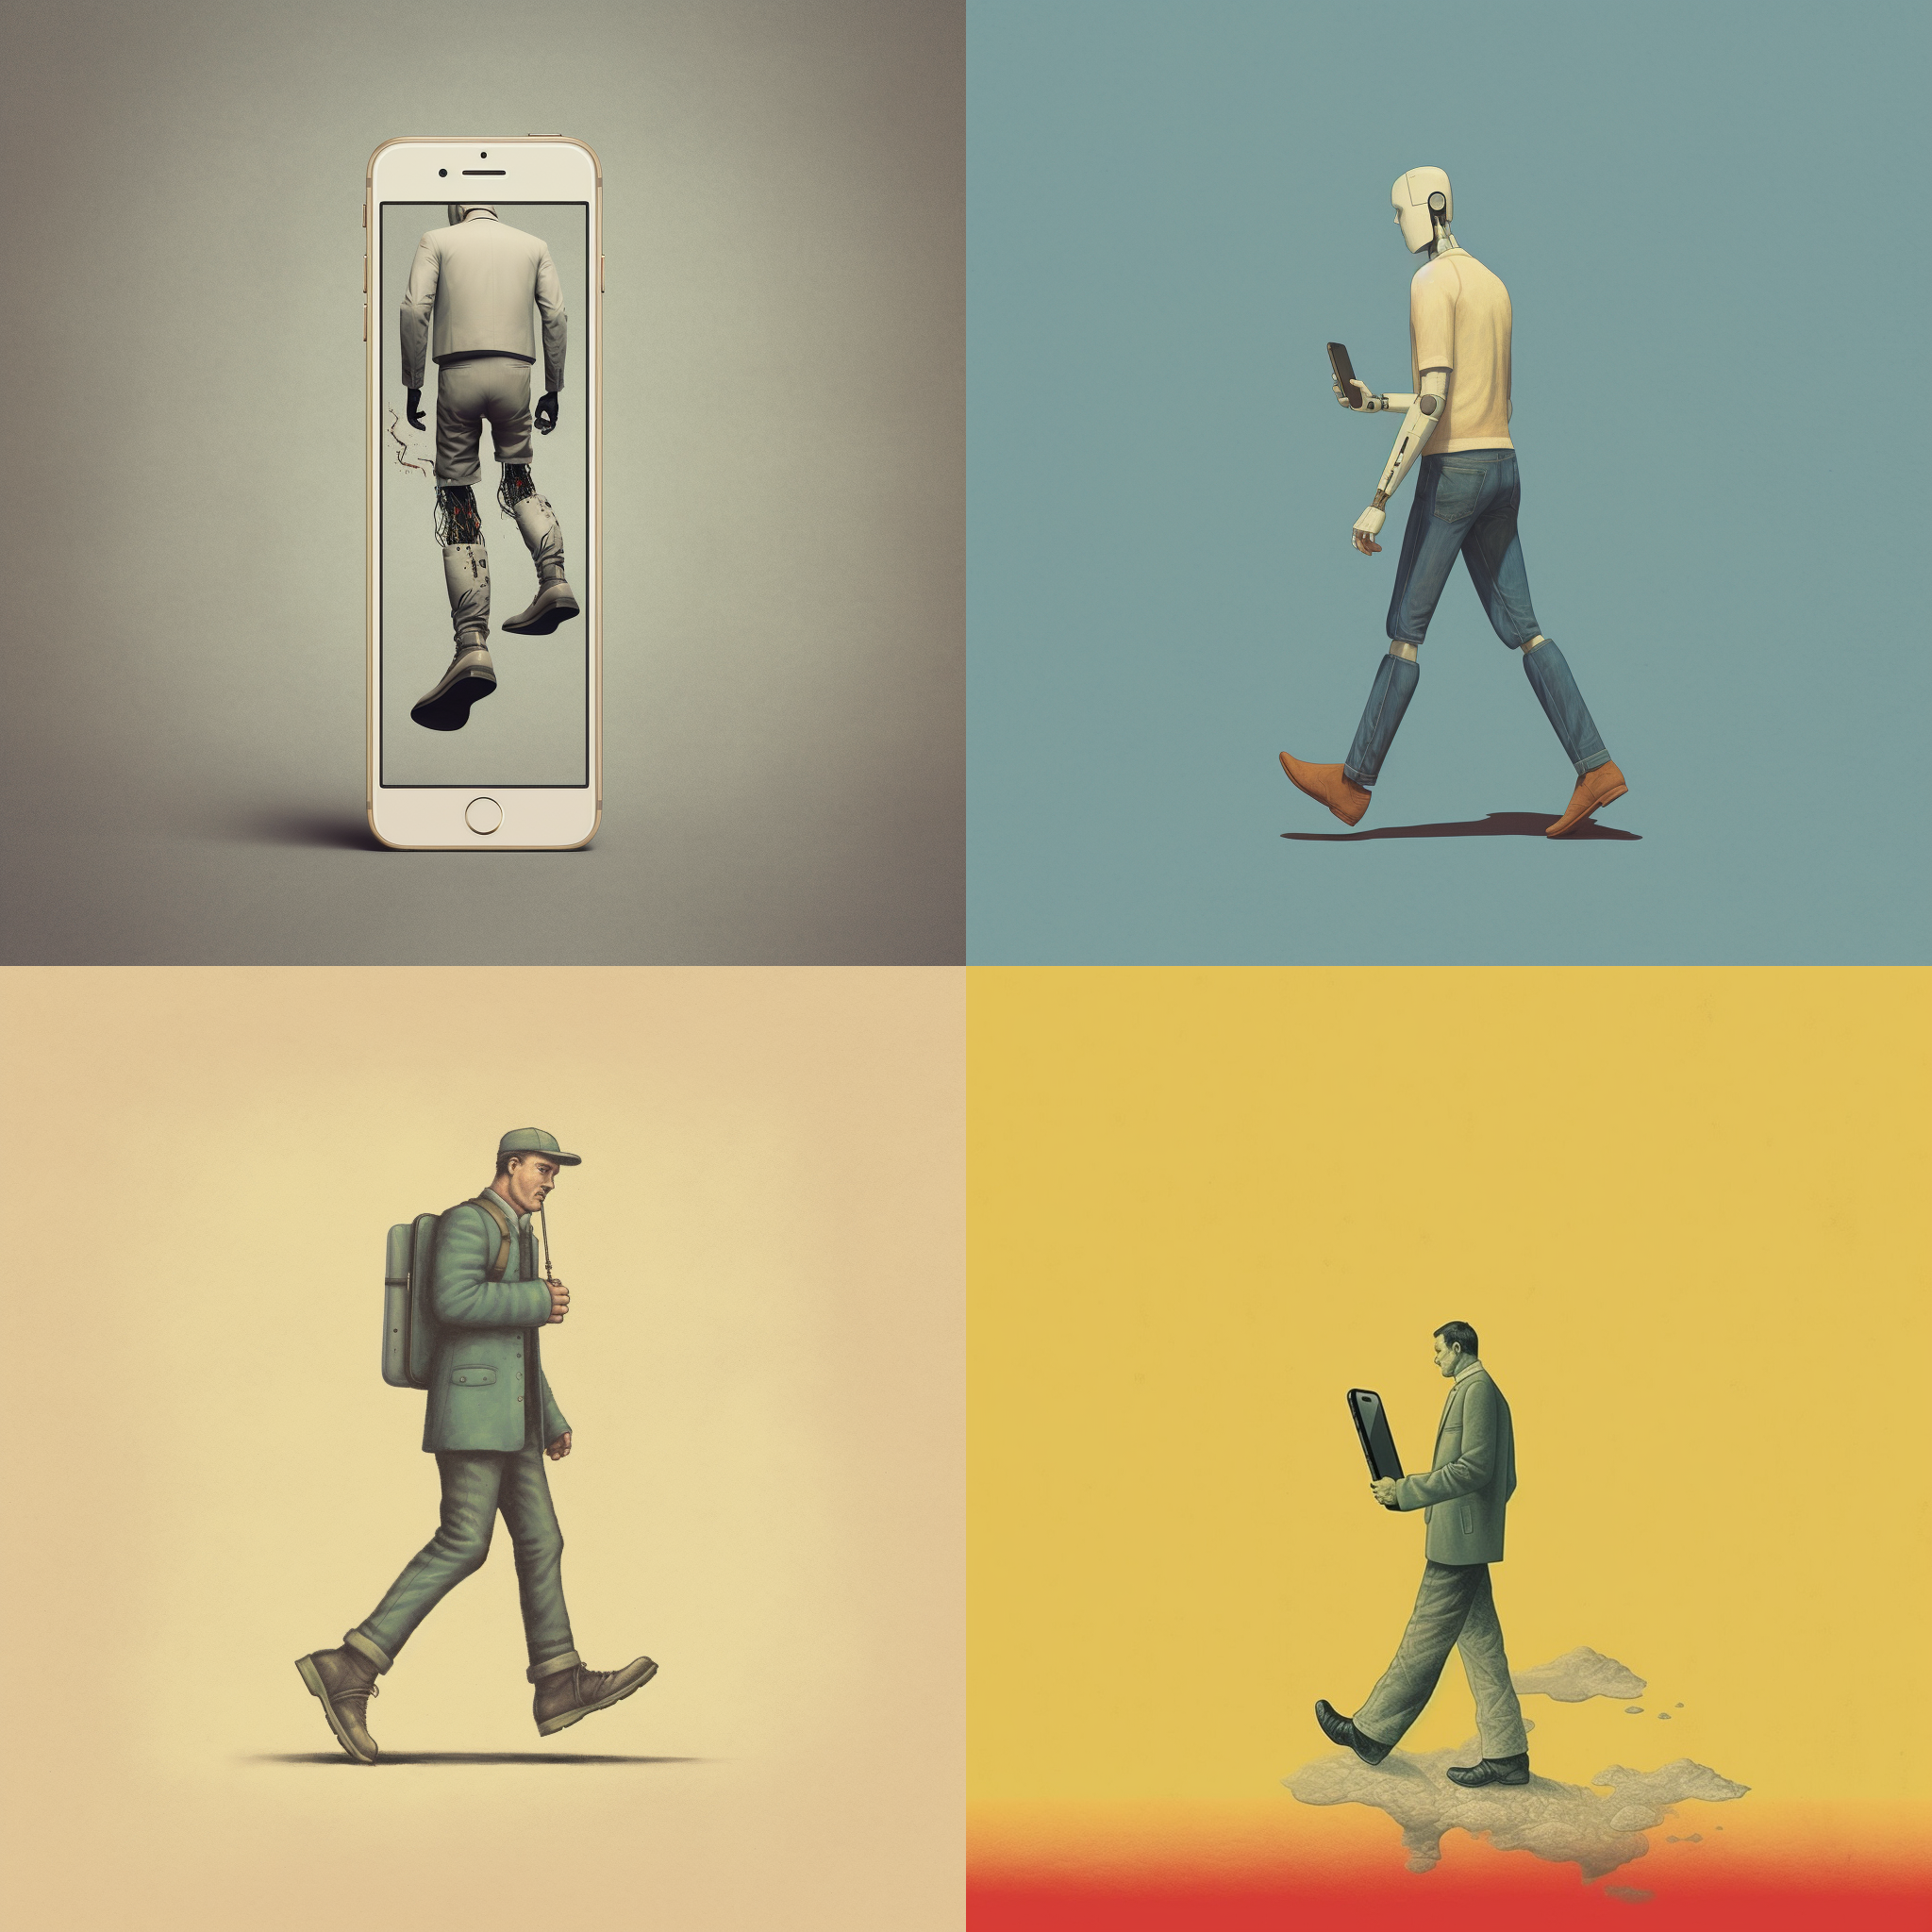 fernando172543 a smartphone becoming human walking on his own l ce4a41d9 3308 4e83 9907 d8482f56239b